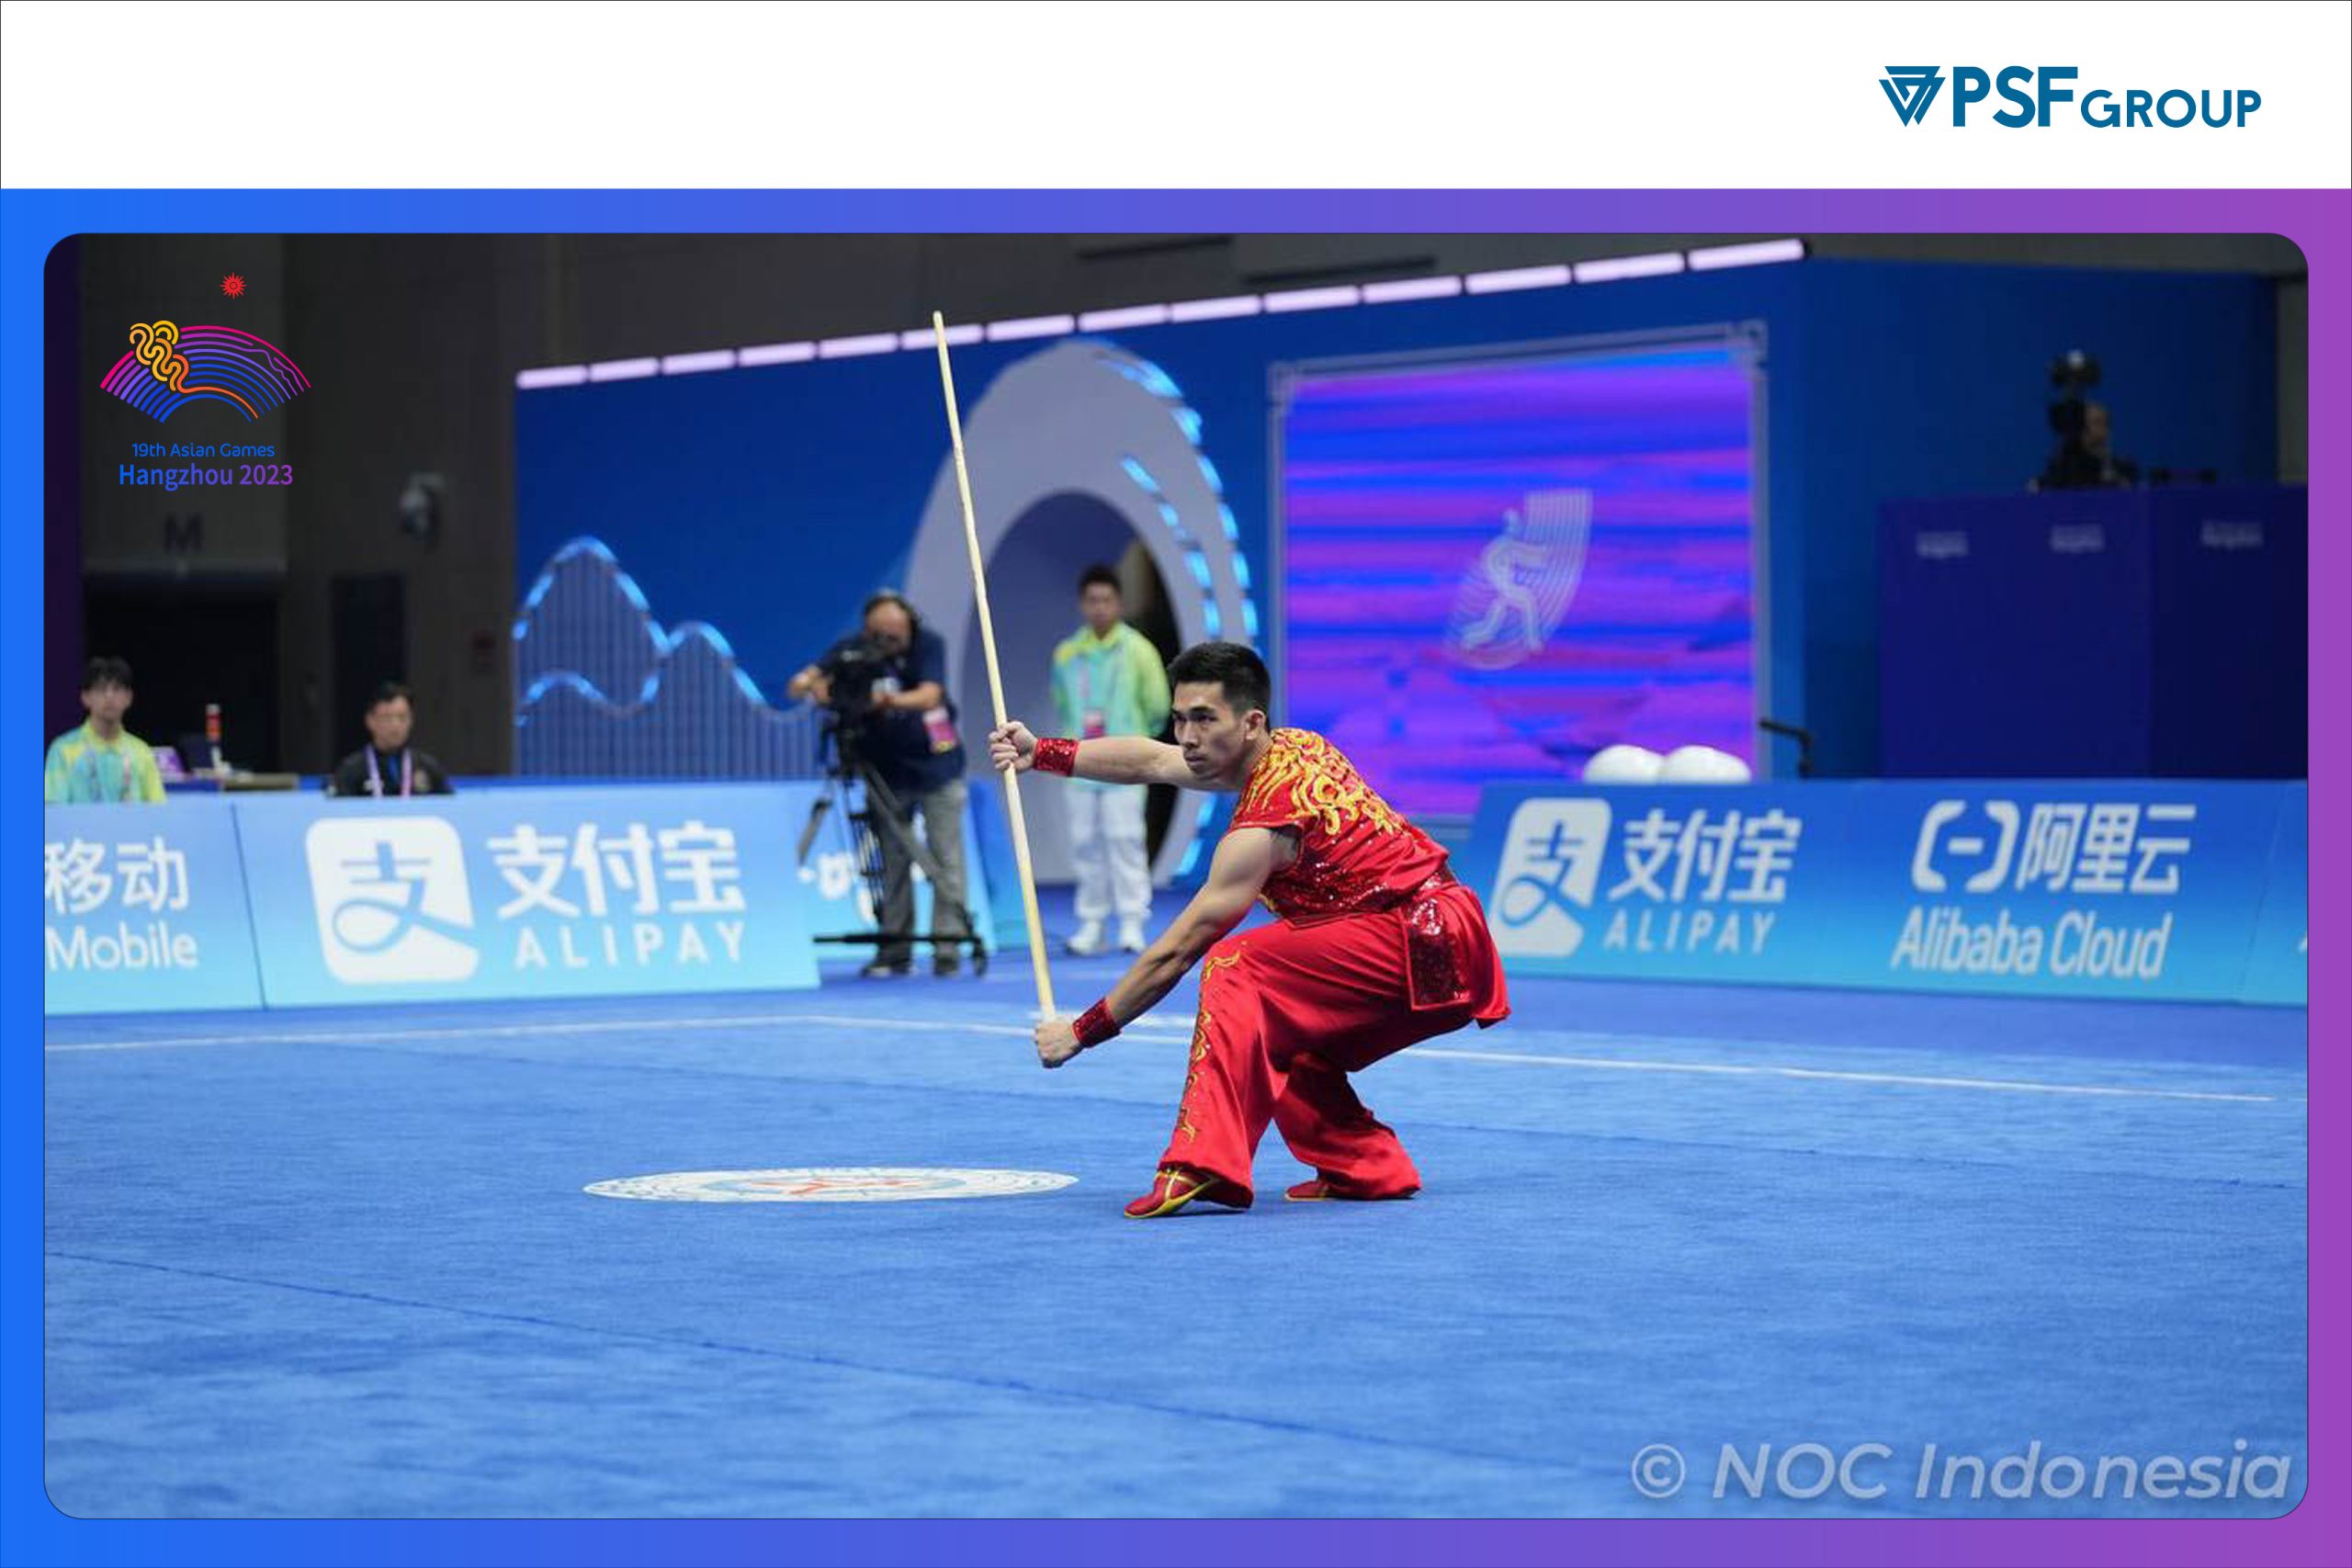 Tak Mau Kalah! Wushu Sumbang Emas Ketiga Untuk Indonesia di Asian Games 2022 Hangzhou - iMSPORT.TV